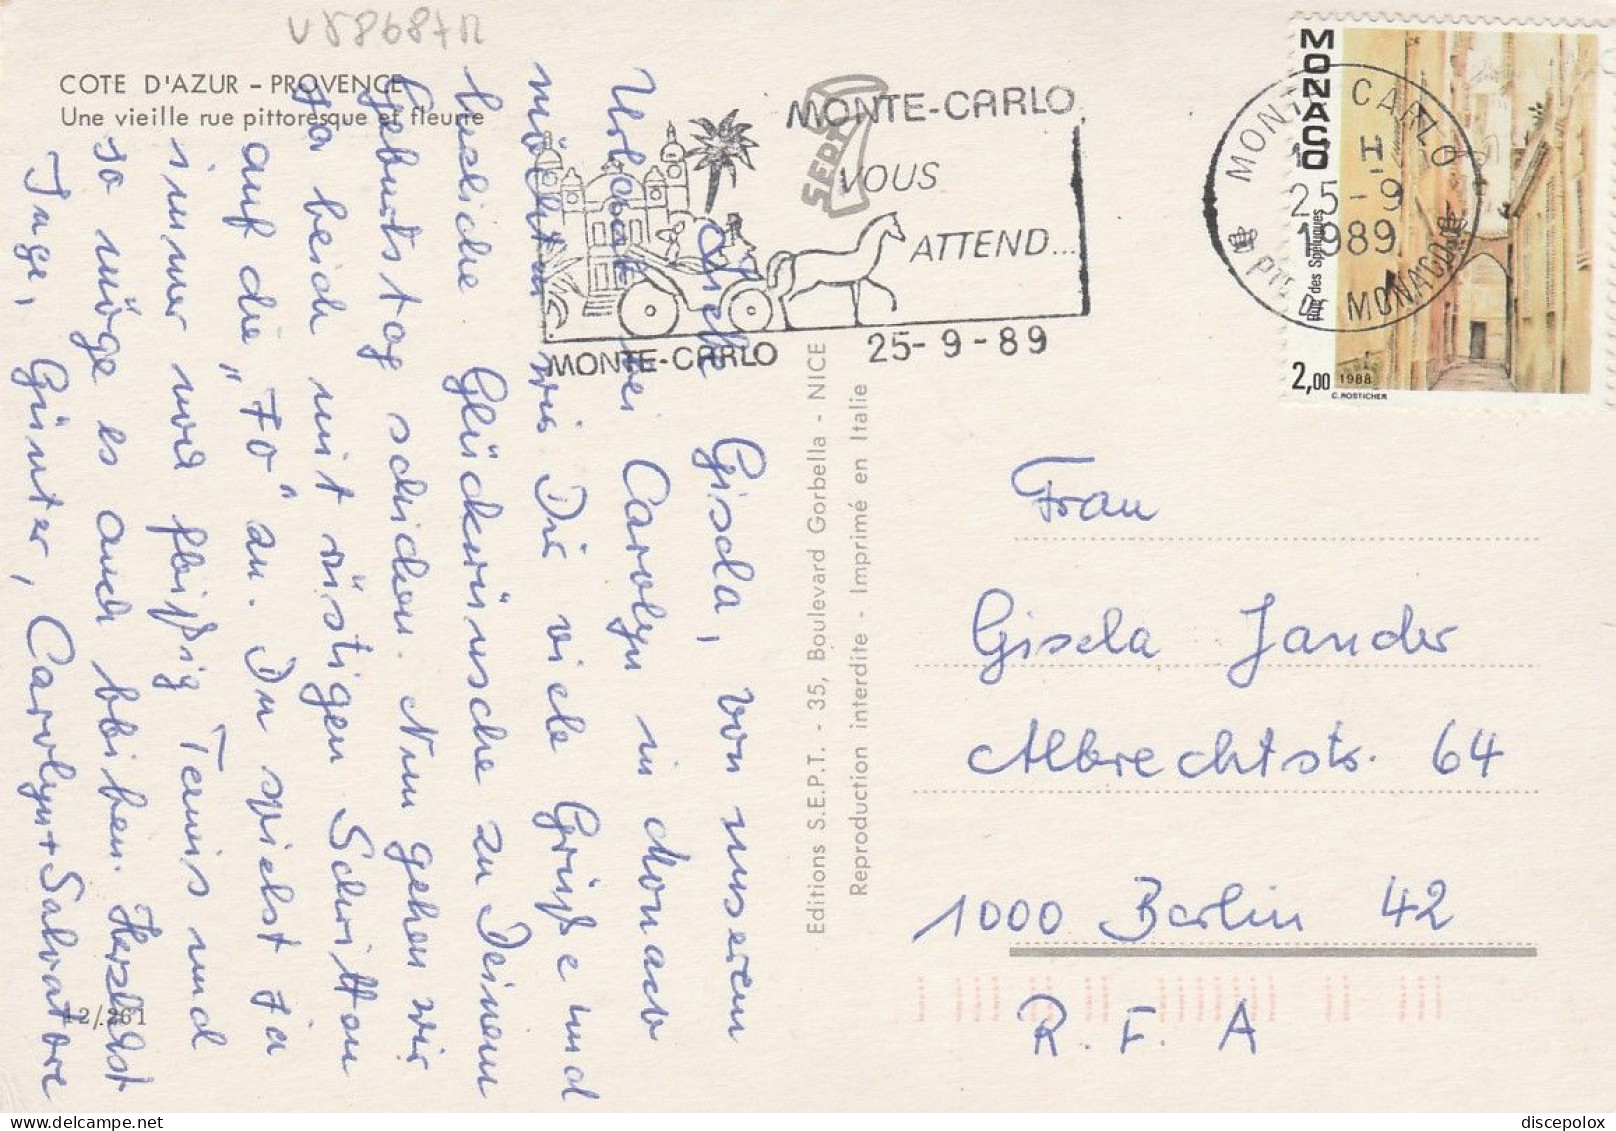 U5868 Monaco - 2 Francs Rue Des Spelugues - Nice Stamps Timbres Francobolli / Viaggiata 1989 - Storia Postale